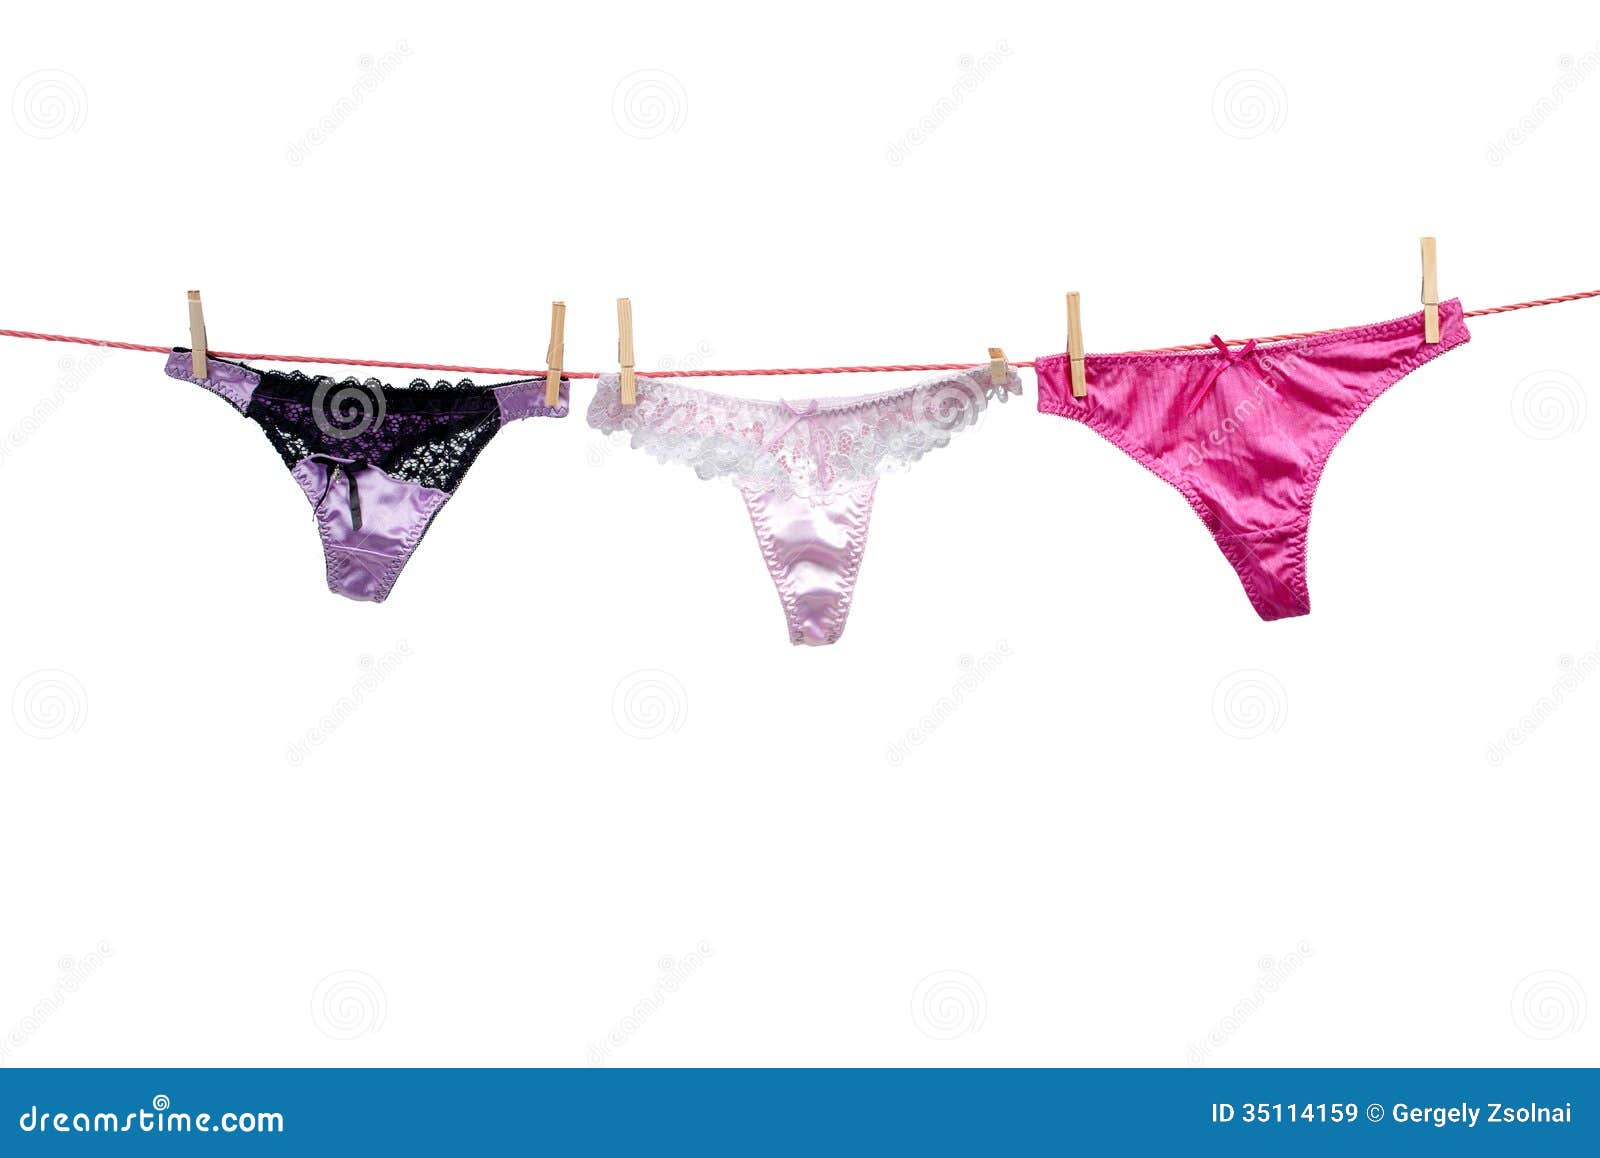 Free Pictures Of Women In Panties